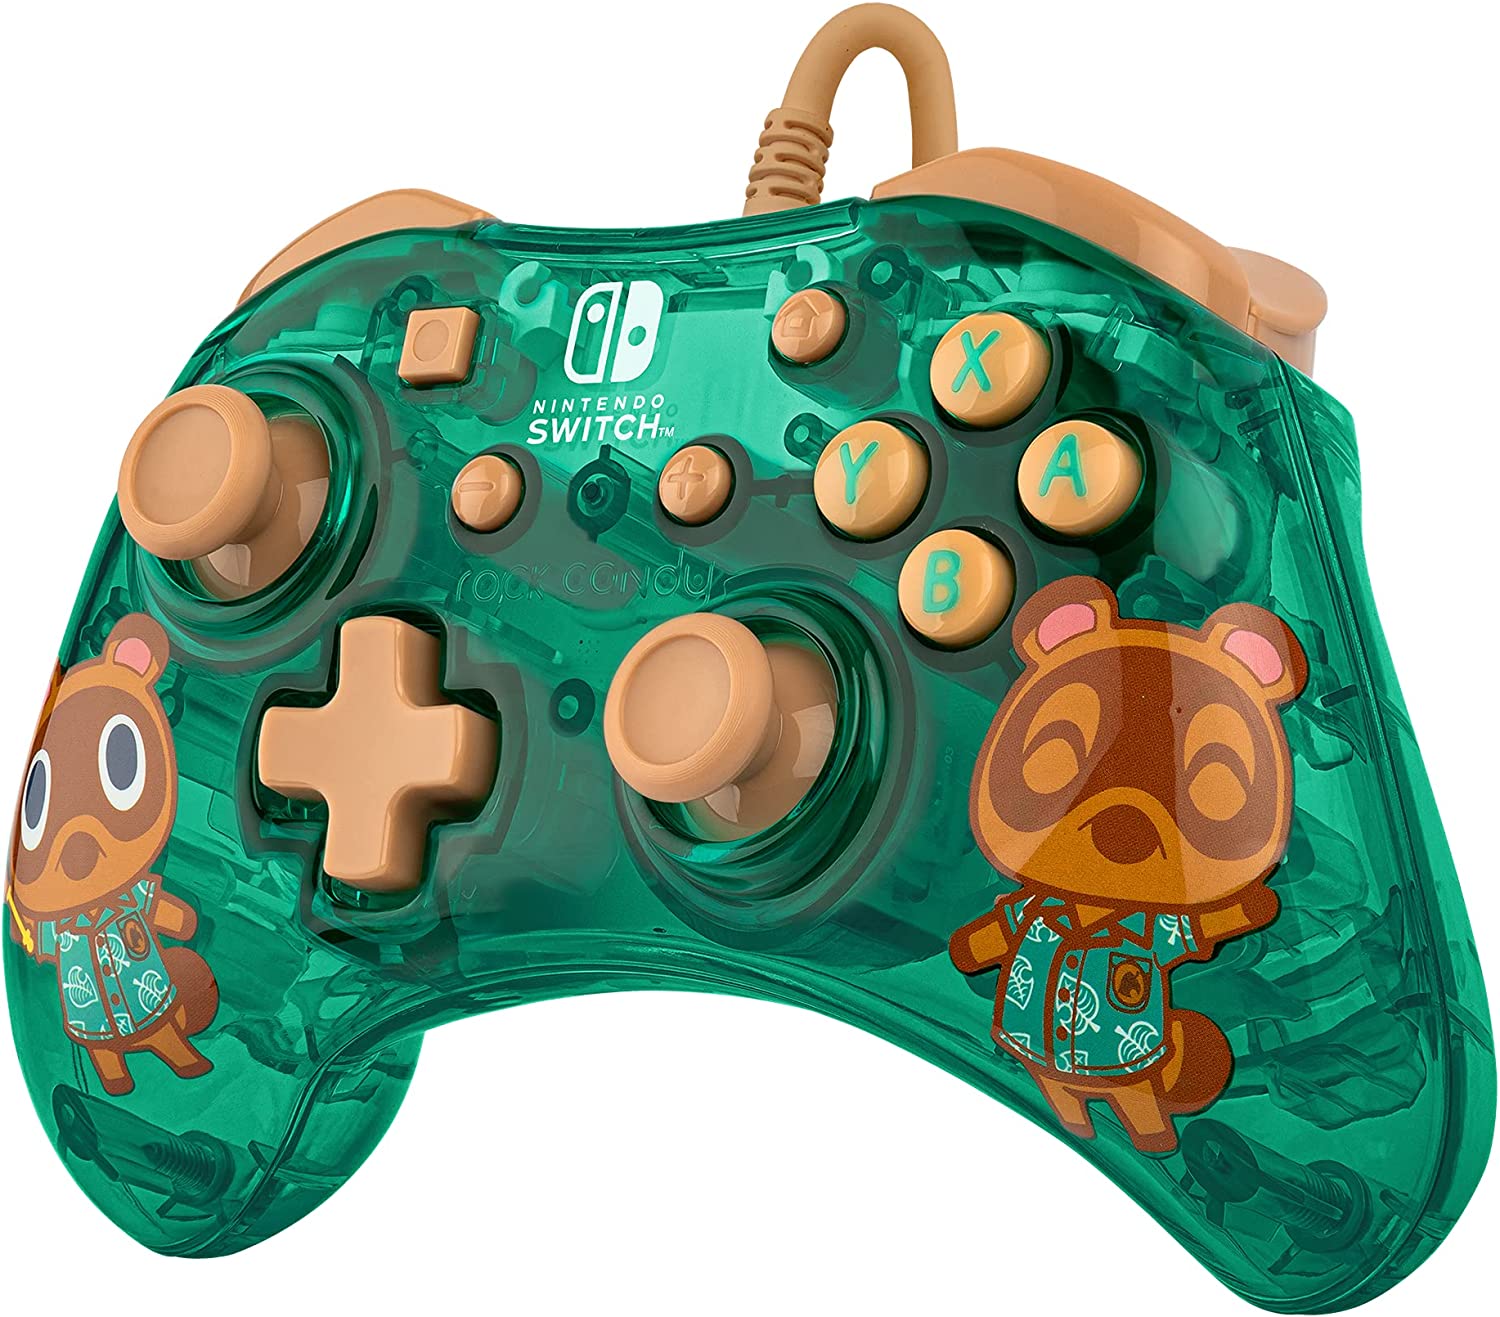 Control Alámbrico PDP Rock Candy Animal Crossing (Verde) - Nintendo SWITCH